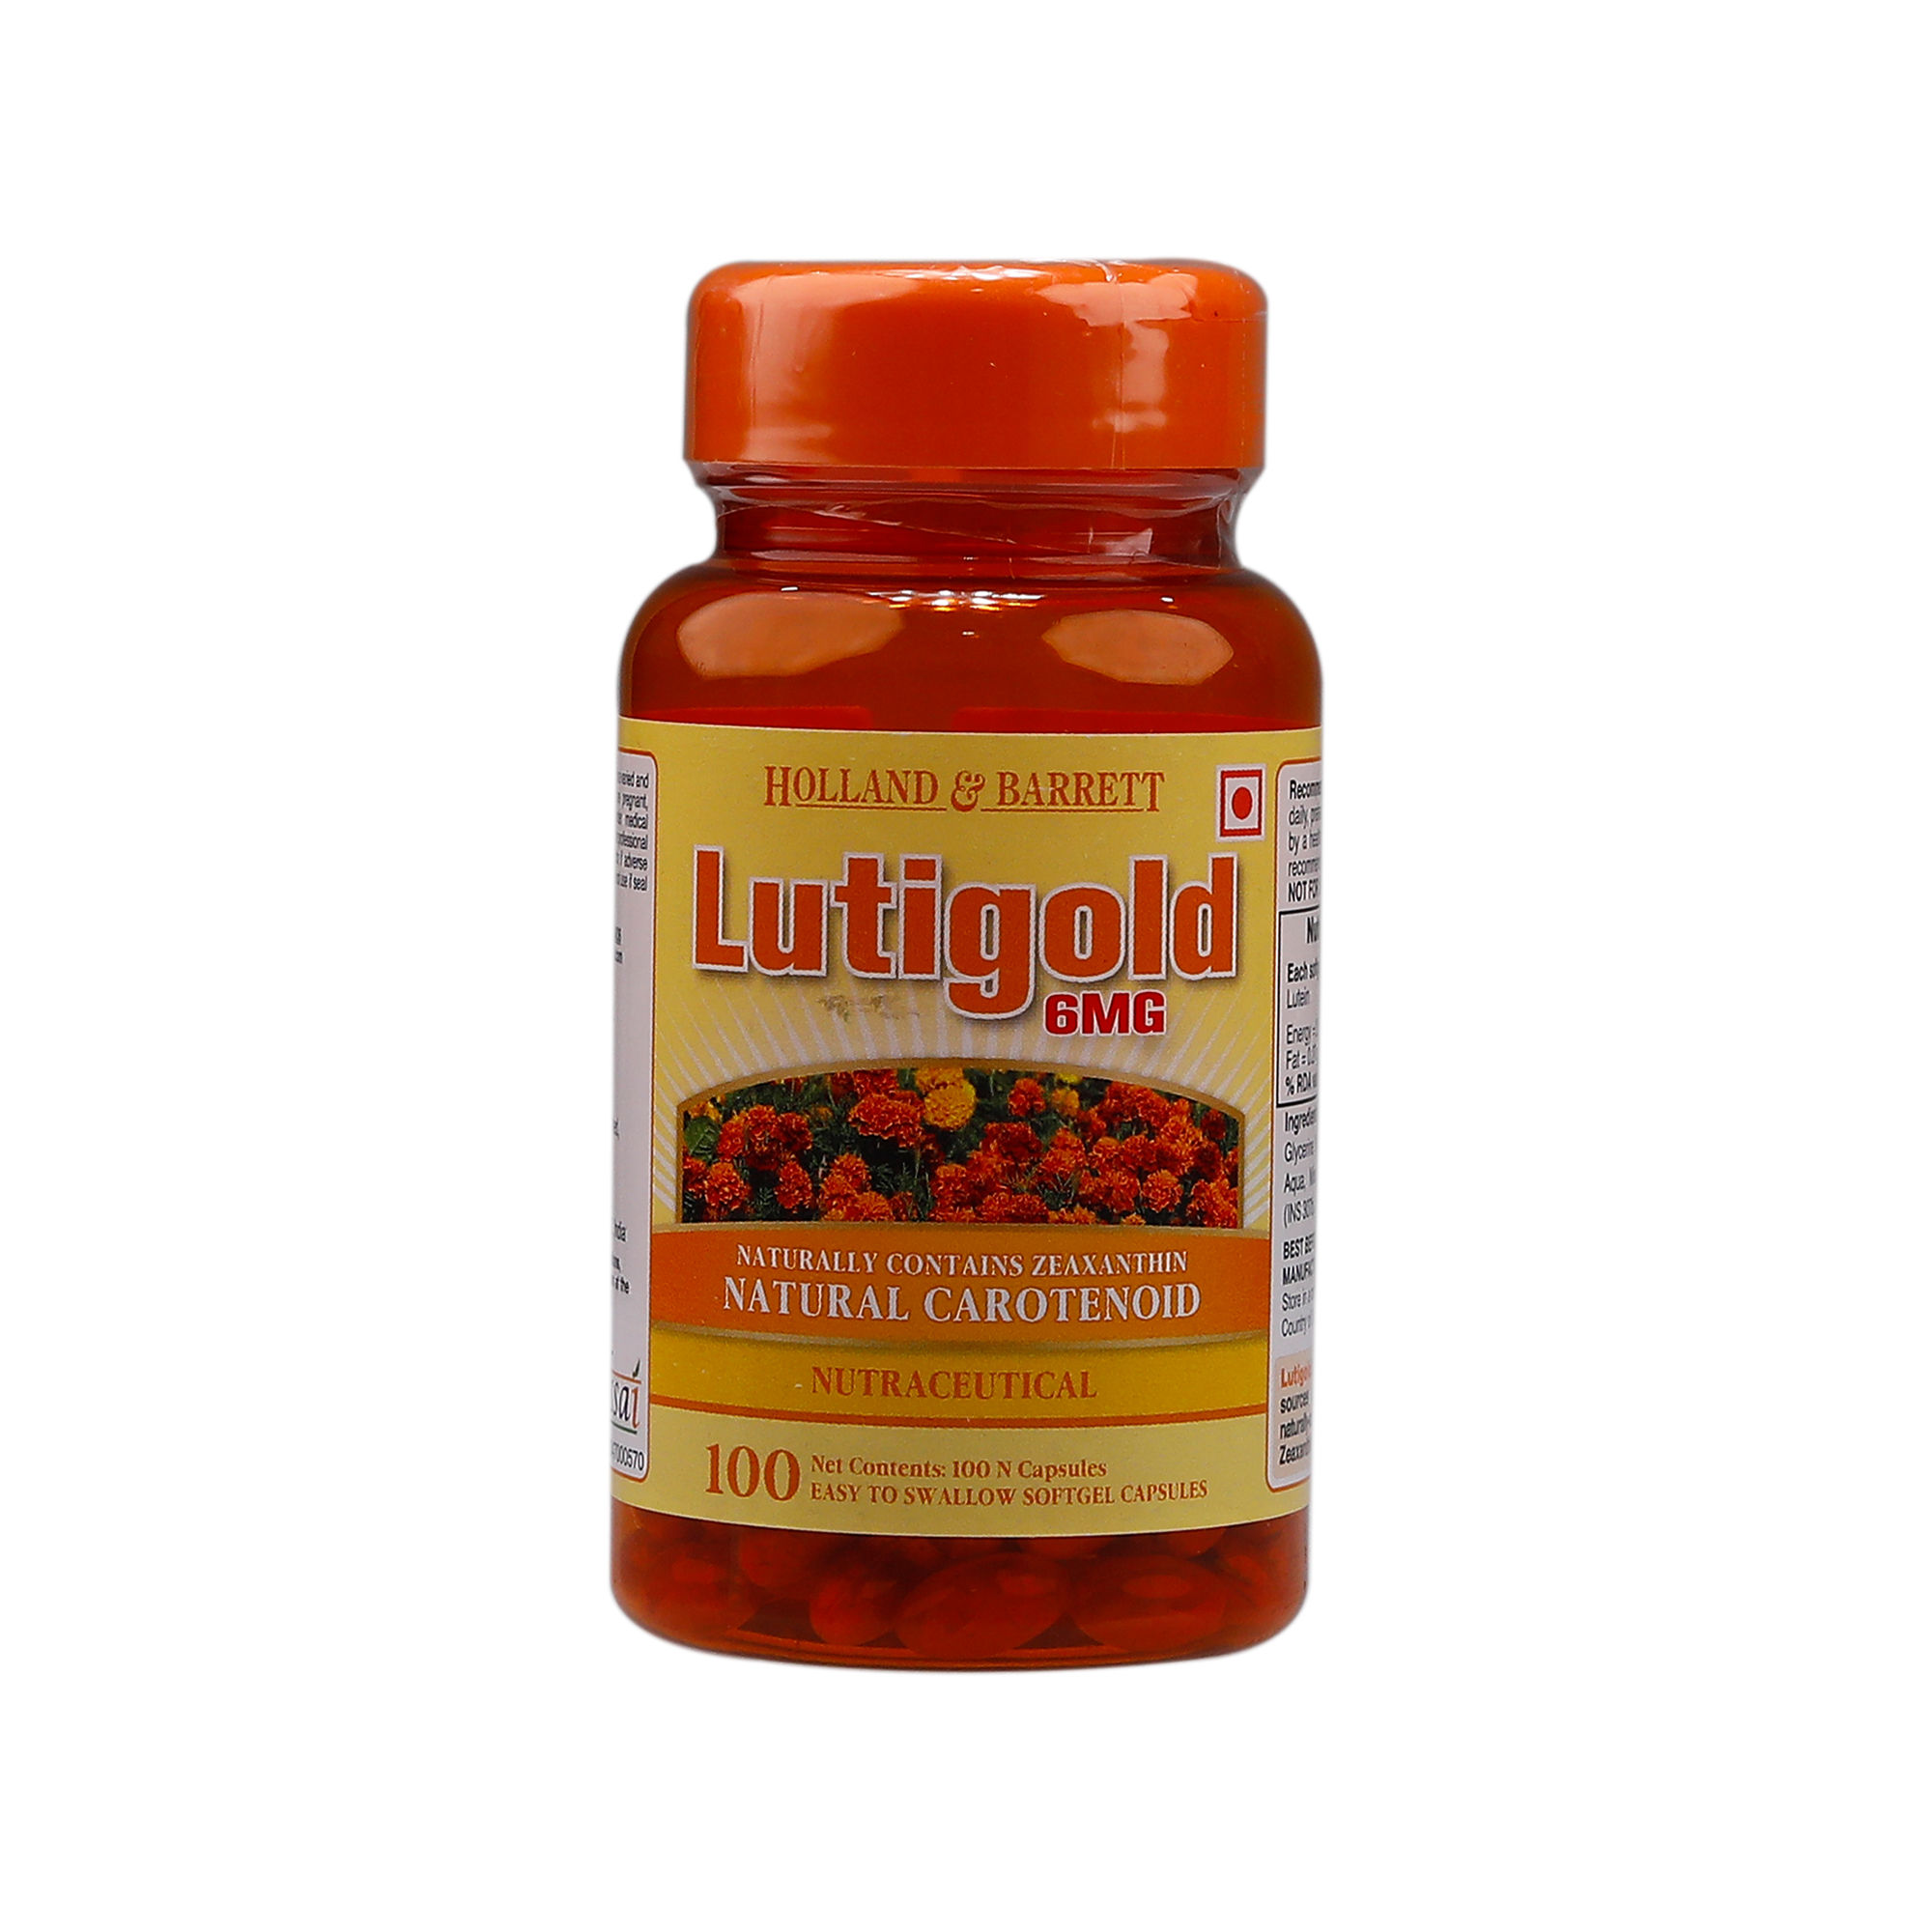 Buy Holland & Barrett Lutigold Natural Carotenoid 6 mg, 100 Capsules Online